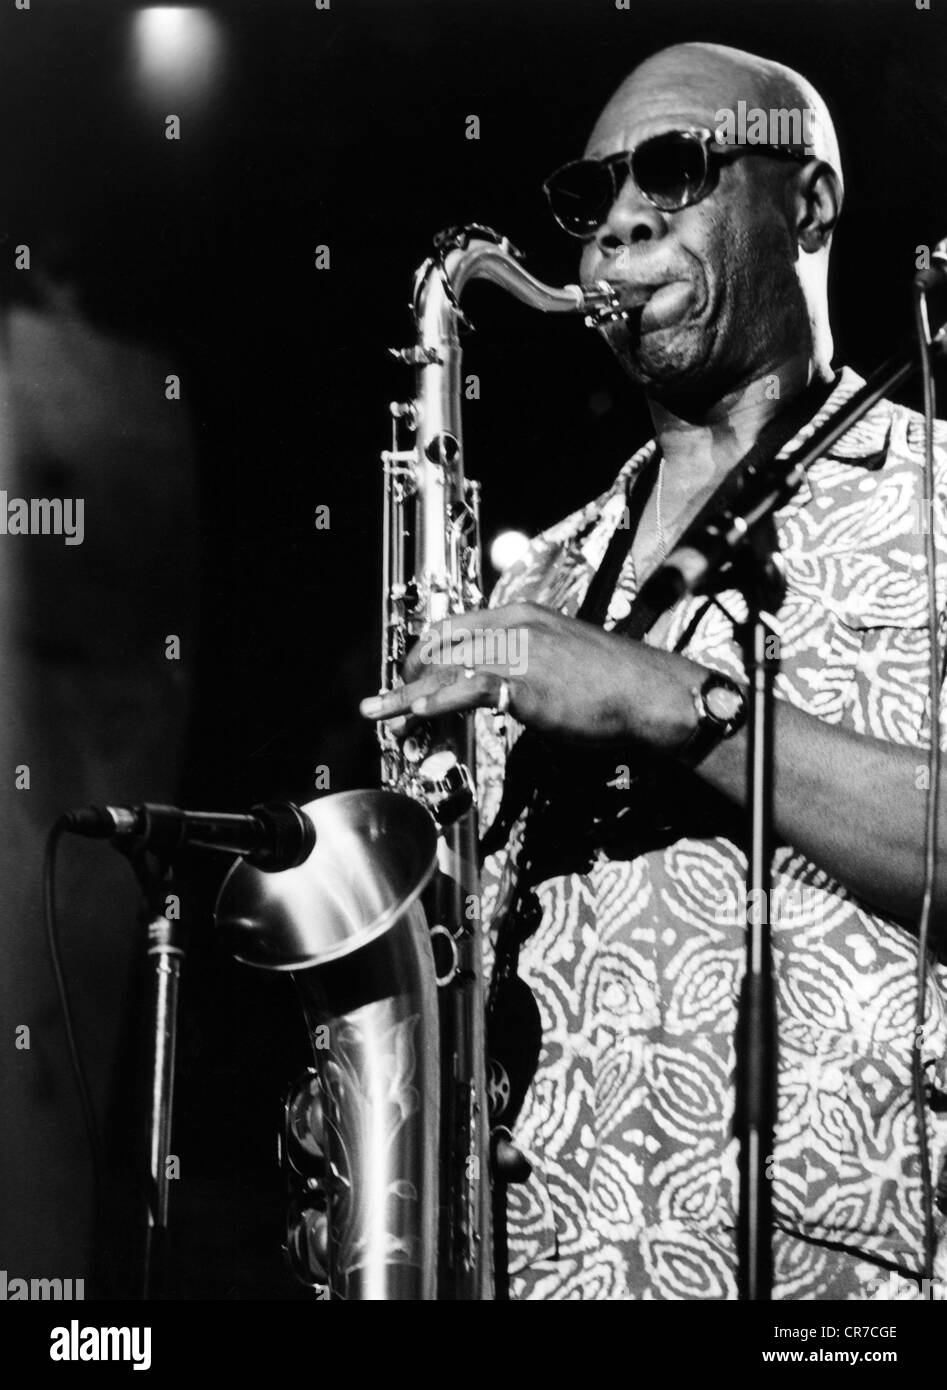 Dibango, Manu, * 12.12.1933, Cameroon musician (saxophonist), half length, during concert gig, Montreux, 1997, , Stock Photo